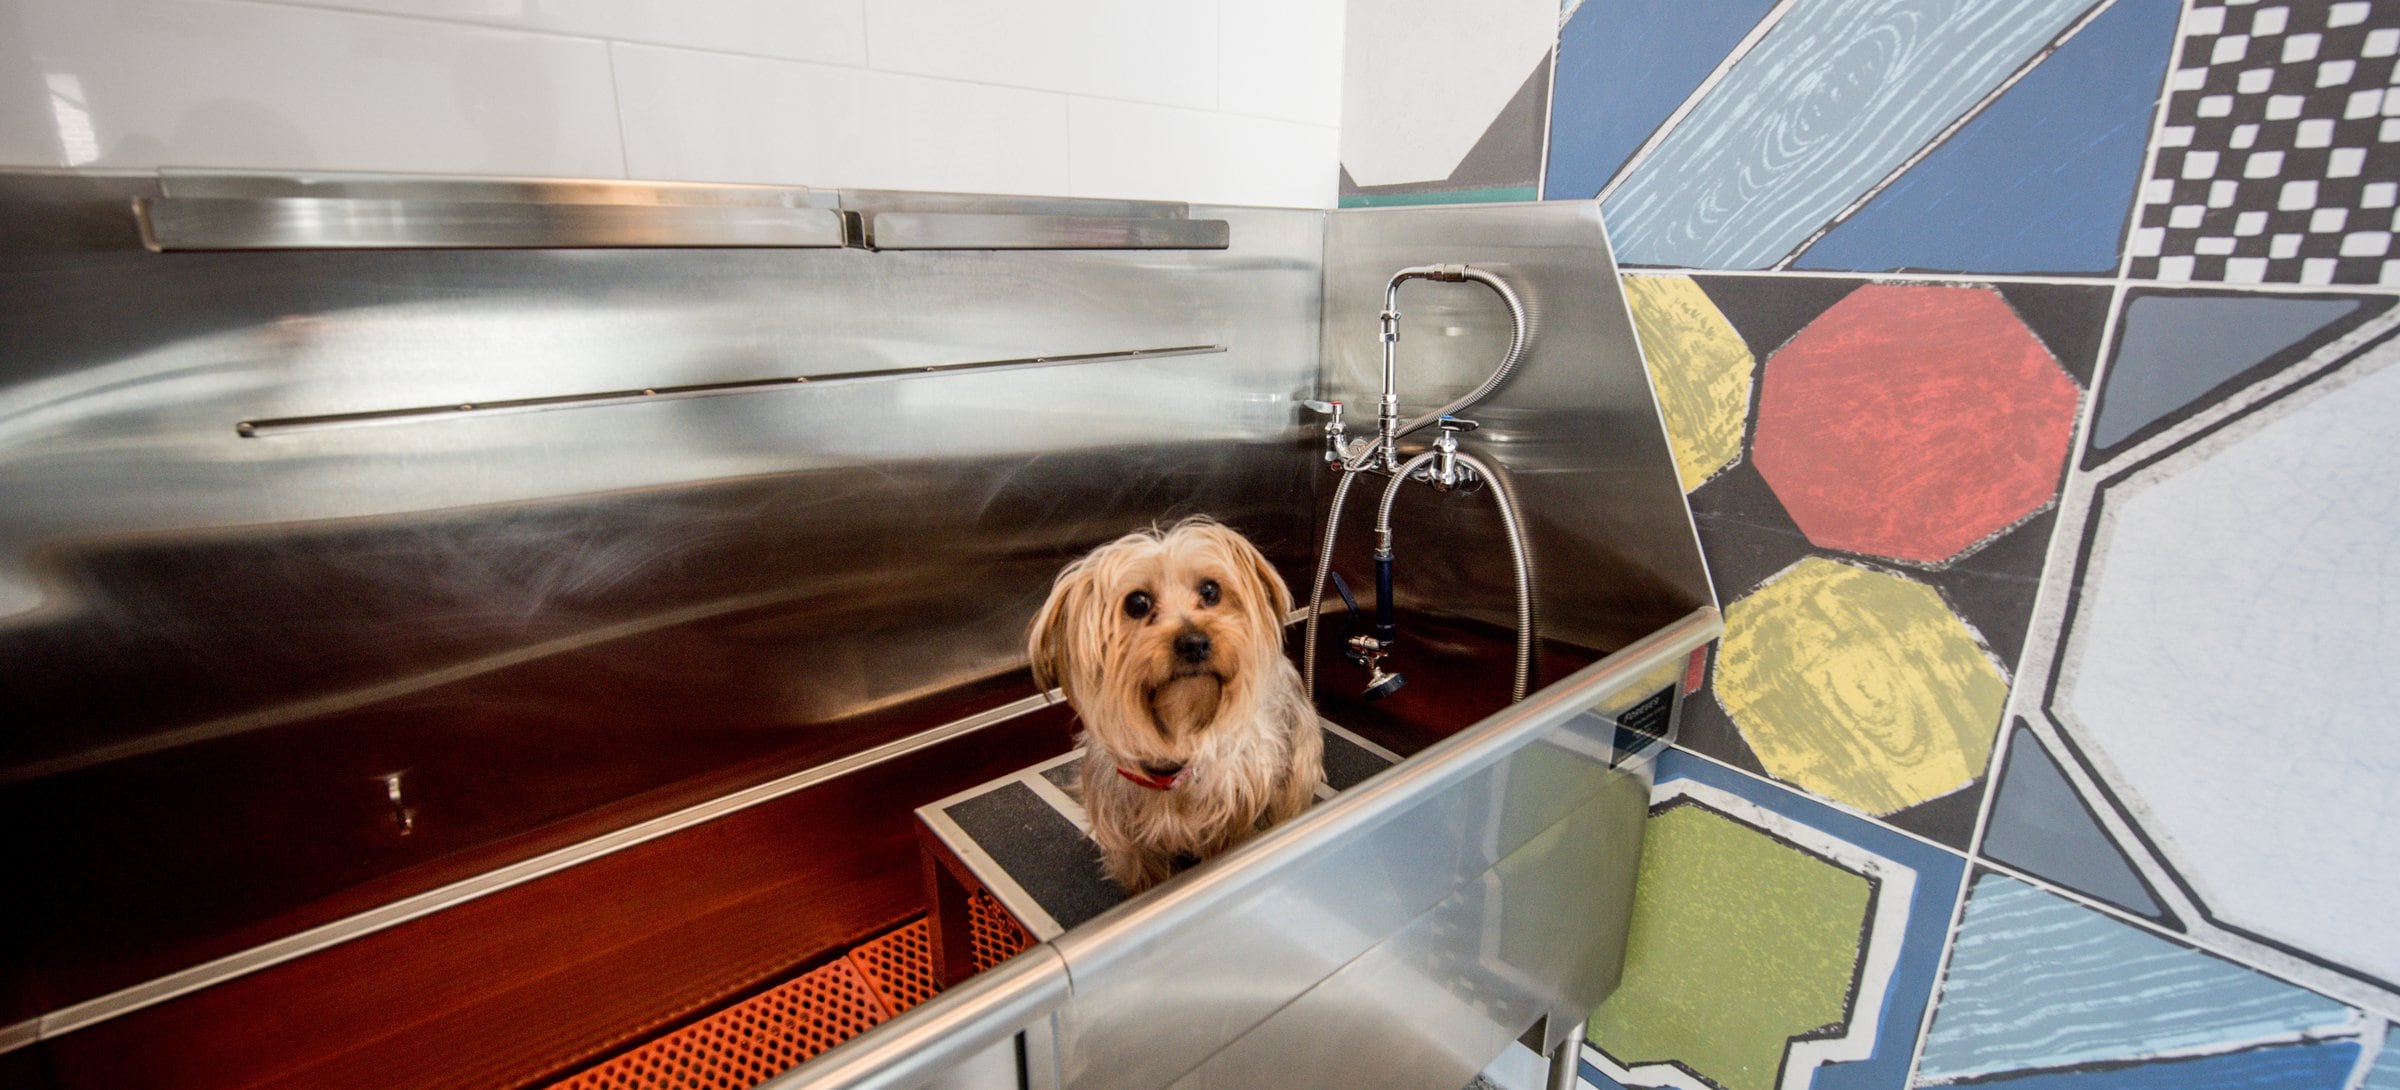 WAG Pet Spa bathing station